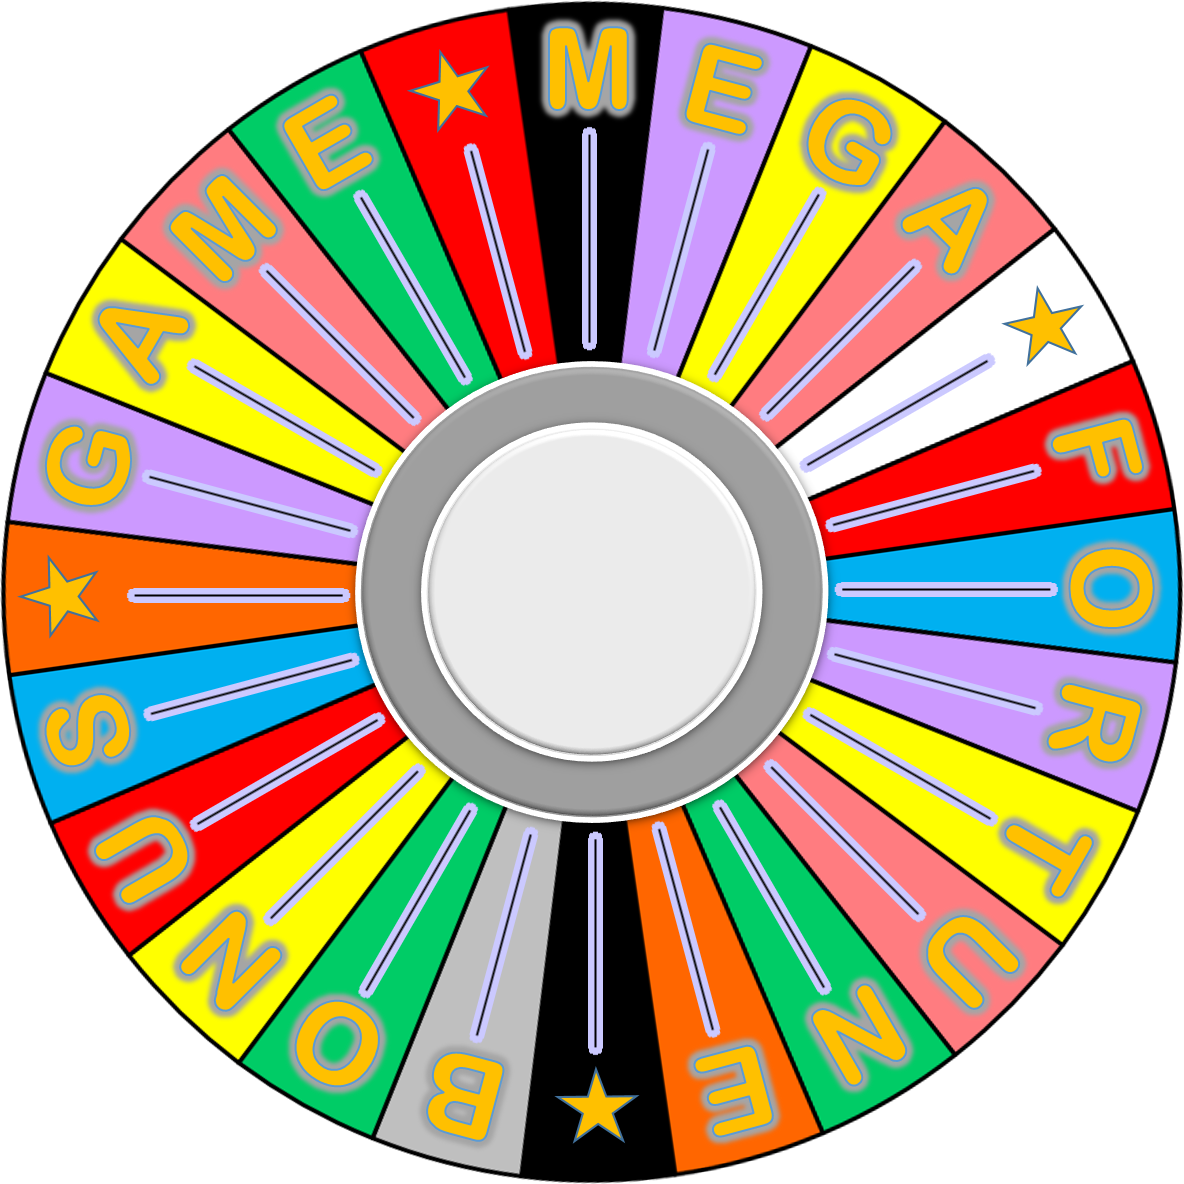 Mega Fortune Bonus Wheel by LeafMan813 on DeviantArt1184 x 1184